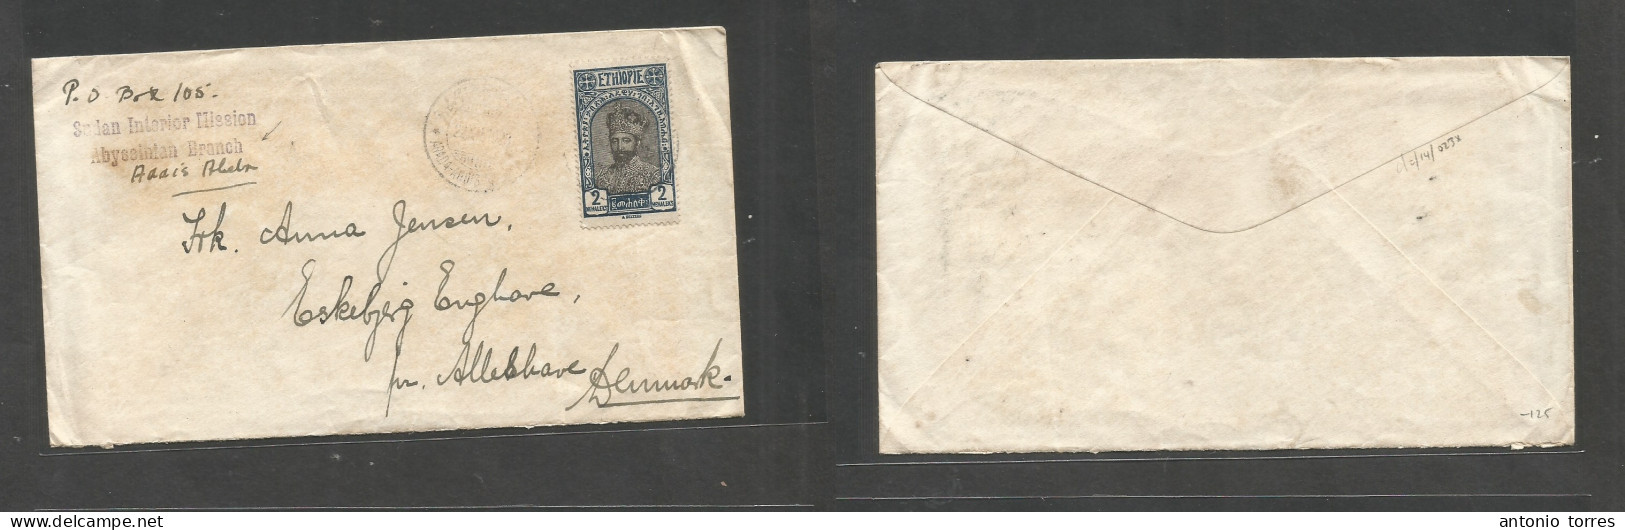 Ethiopia. 1928 (22 Dec) Sudan Mission. Abissinian Branch. Abada, Addis Abeba - Denmark, Eskebjeg. 2m Single Fkd Envelope - Etiopía